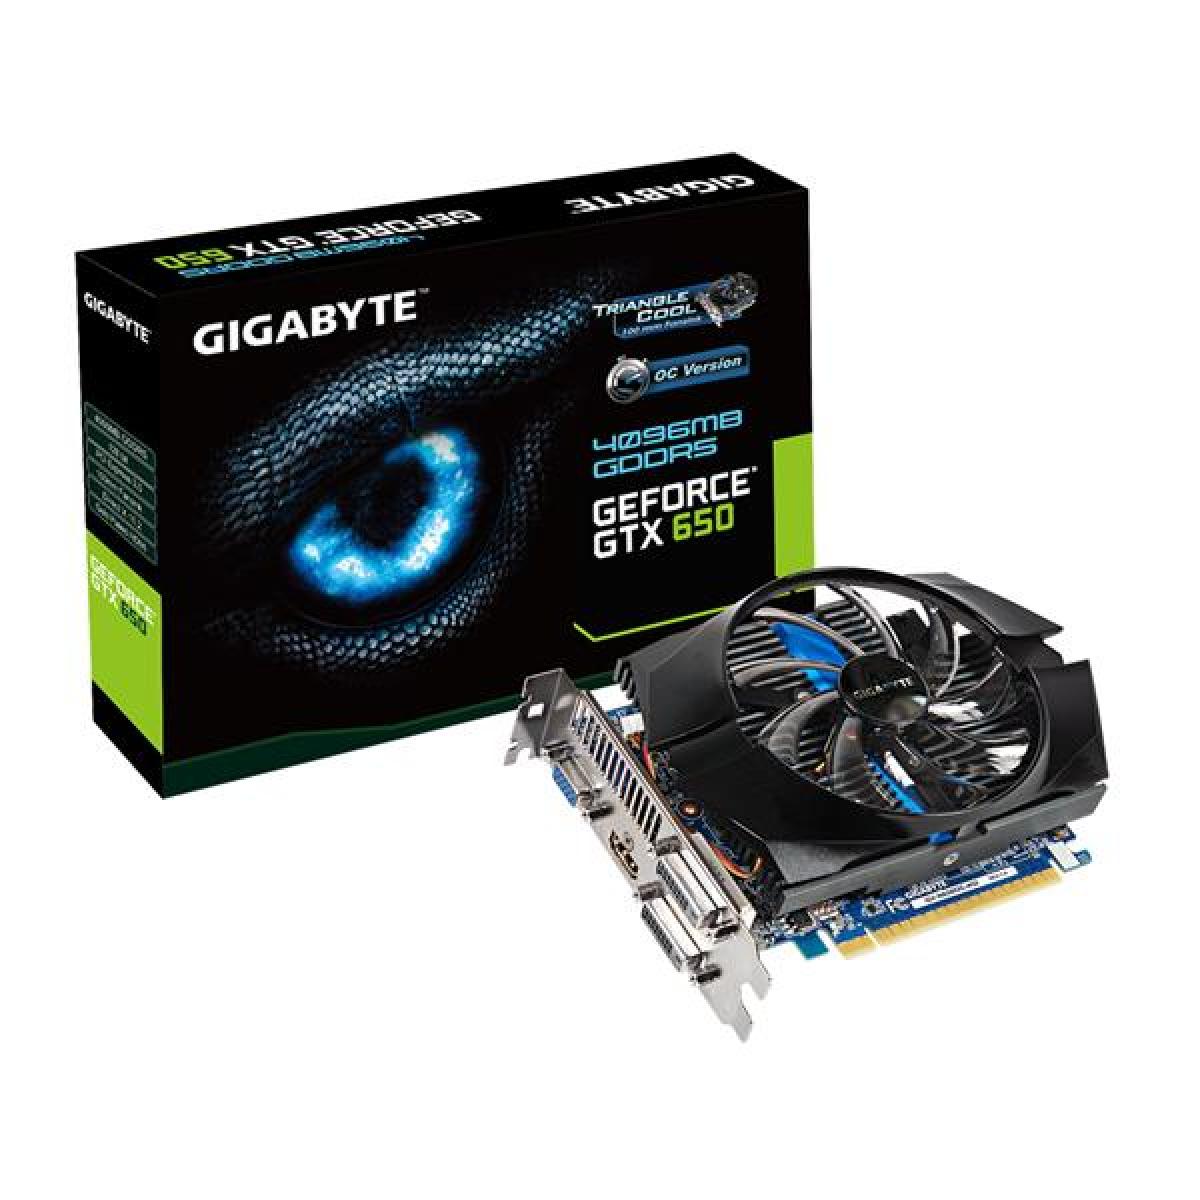 GIGABYTE NVIDIA GeForce GTX 650 OC 4GB GDDR5 | GV-N650OC-4GI | City ...